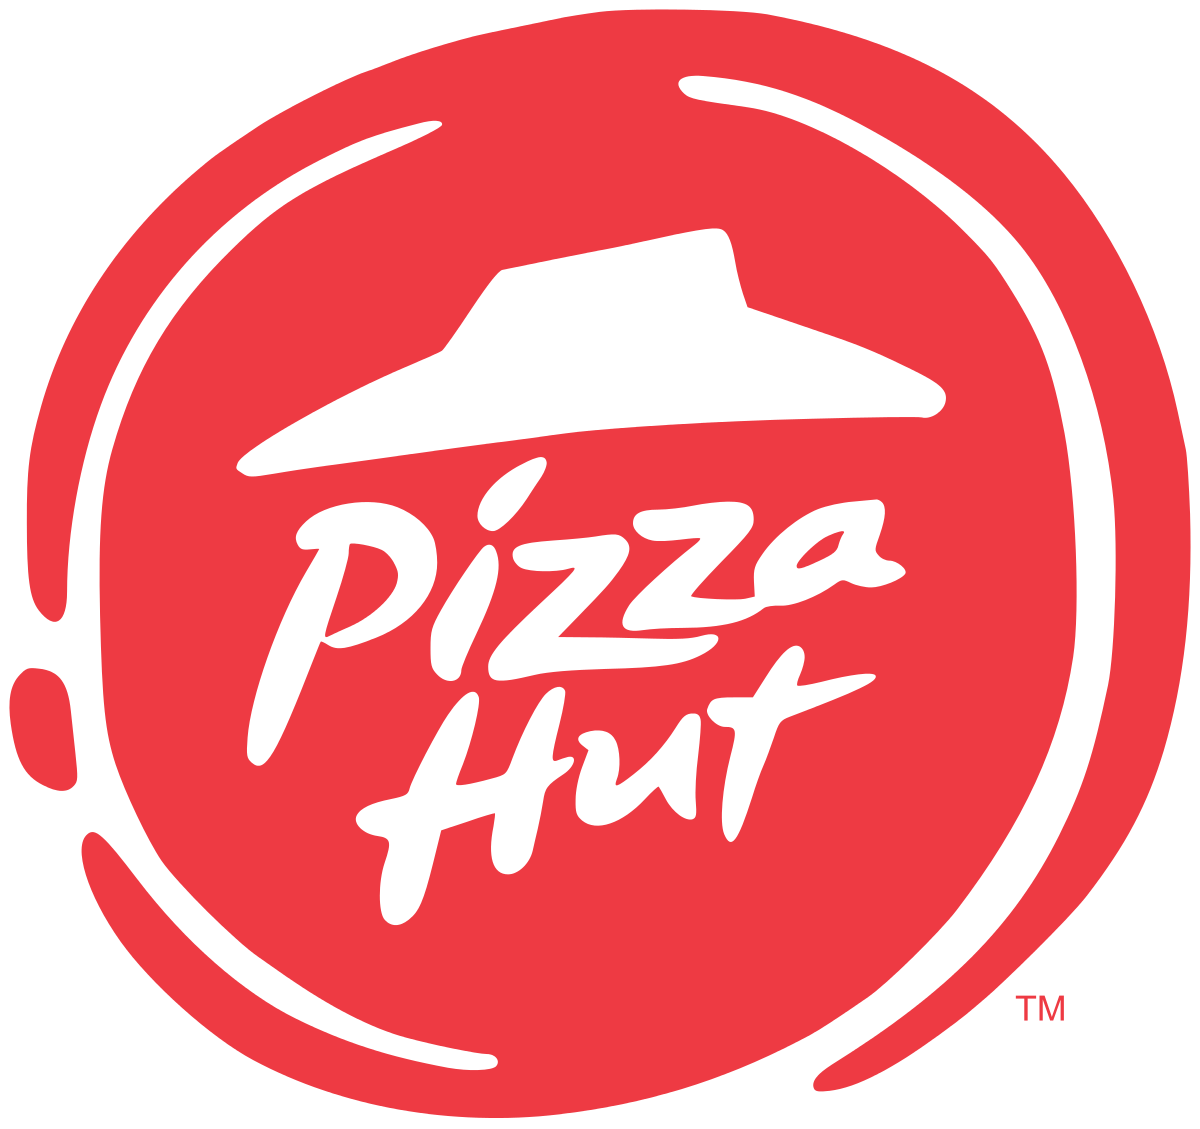 Red and White Circle Restaurant Logo - Pizza Hut